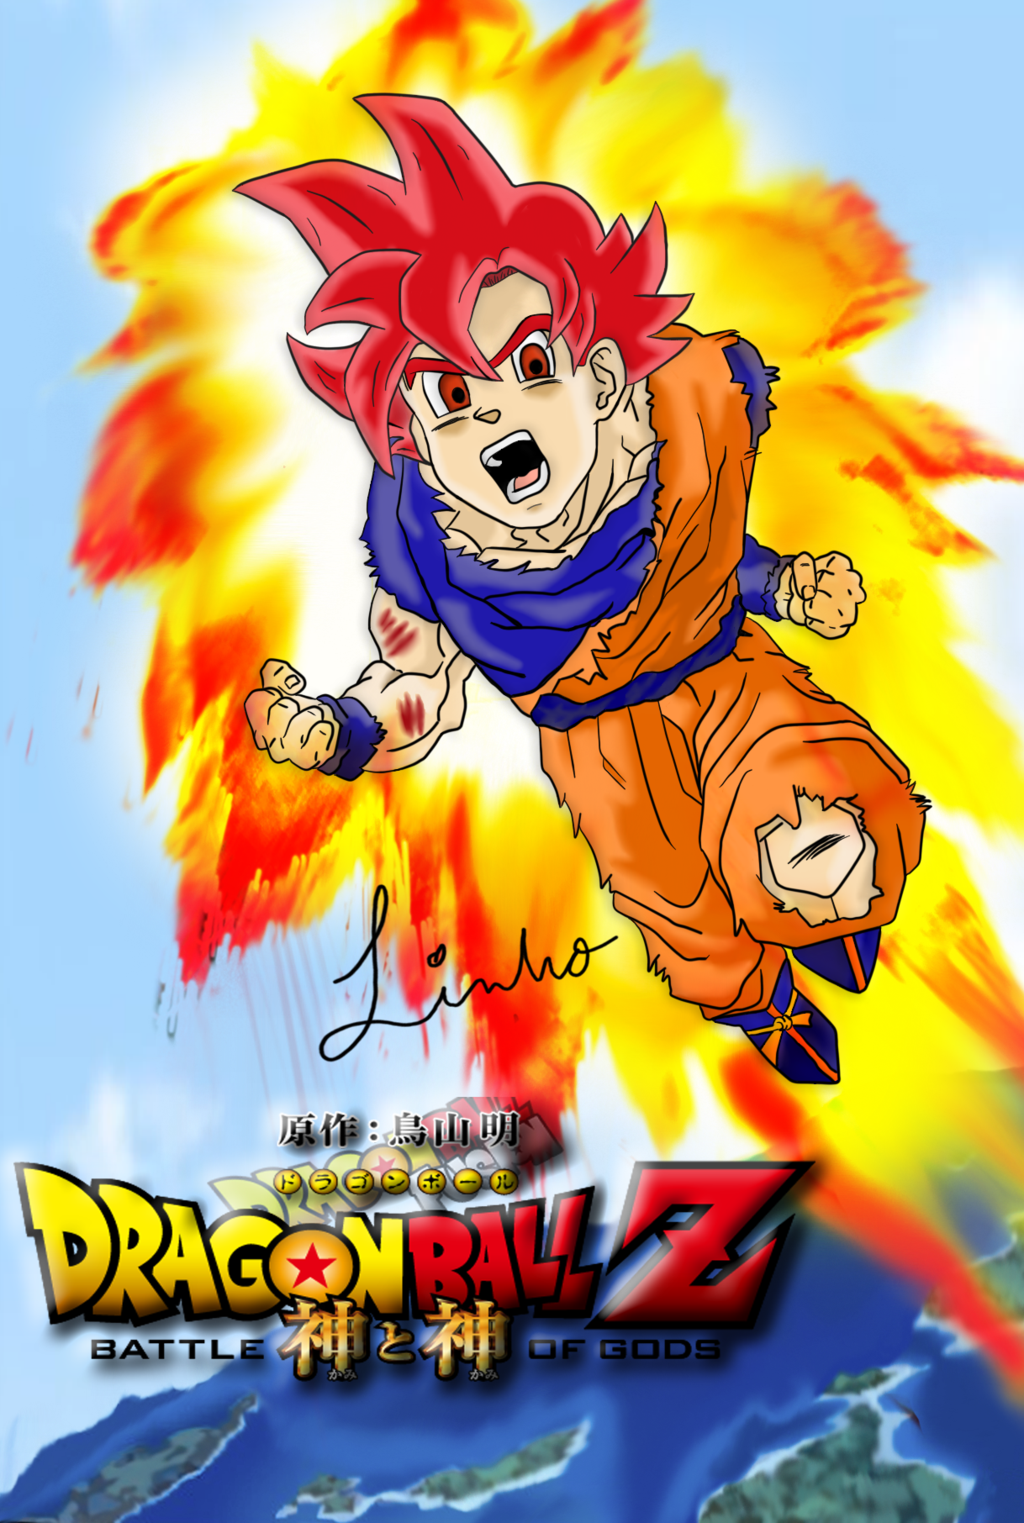 Goku Images goku Super Saiyan God Hd Wallpaper And  Ssb Goku And Vegeta   1280x2148 PNG Download  PNGkit